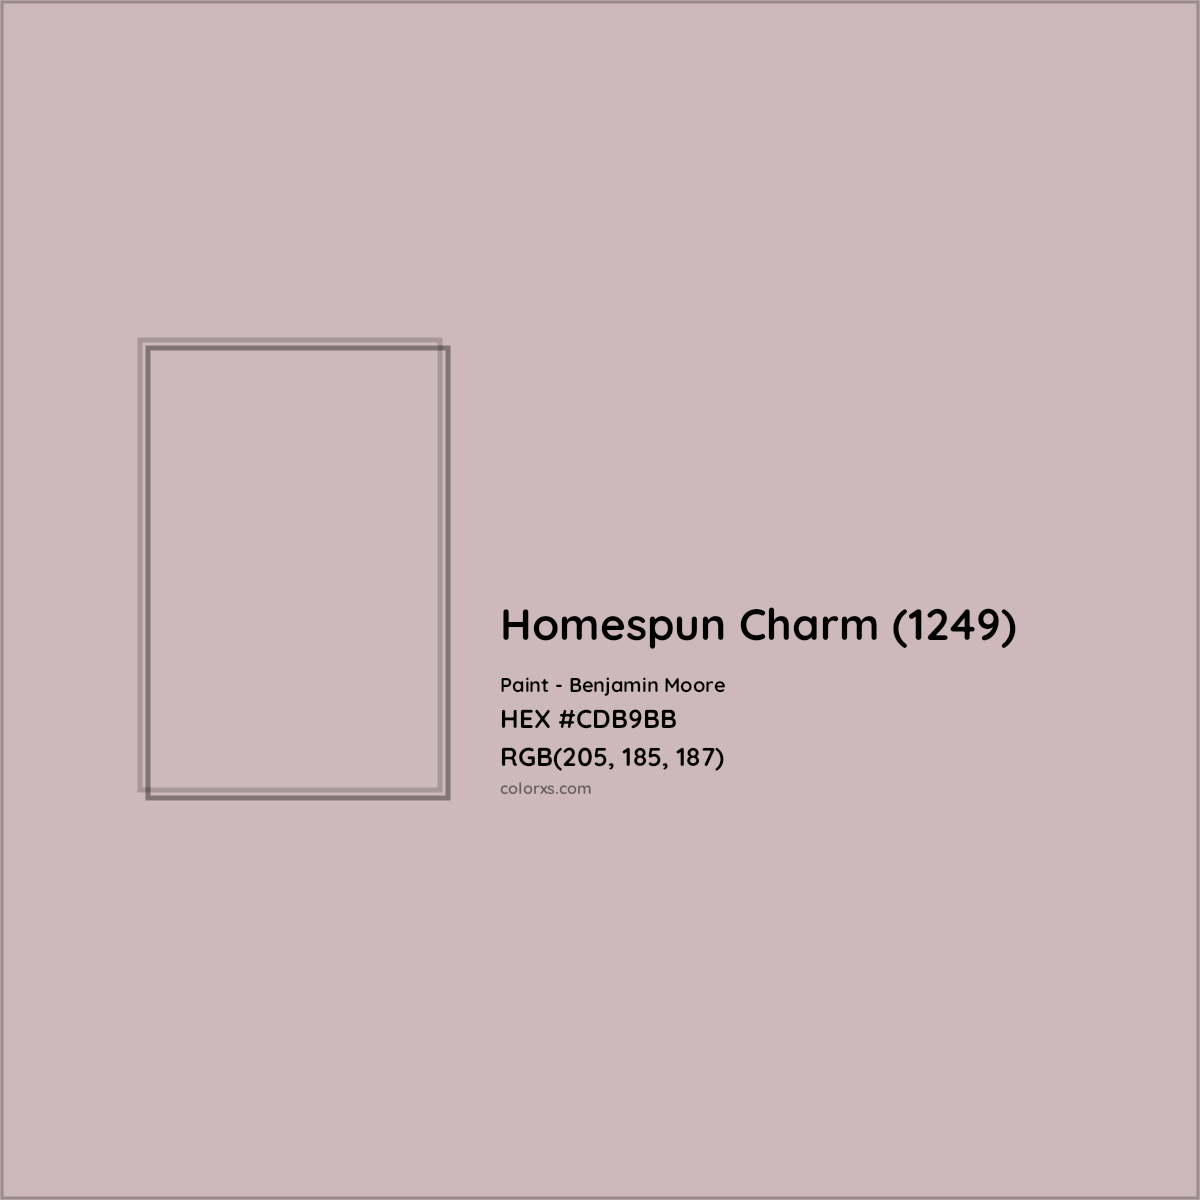 HEX #CDB9BB Homespun Charm (1249) Paint Benjamin Moore - Color Code